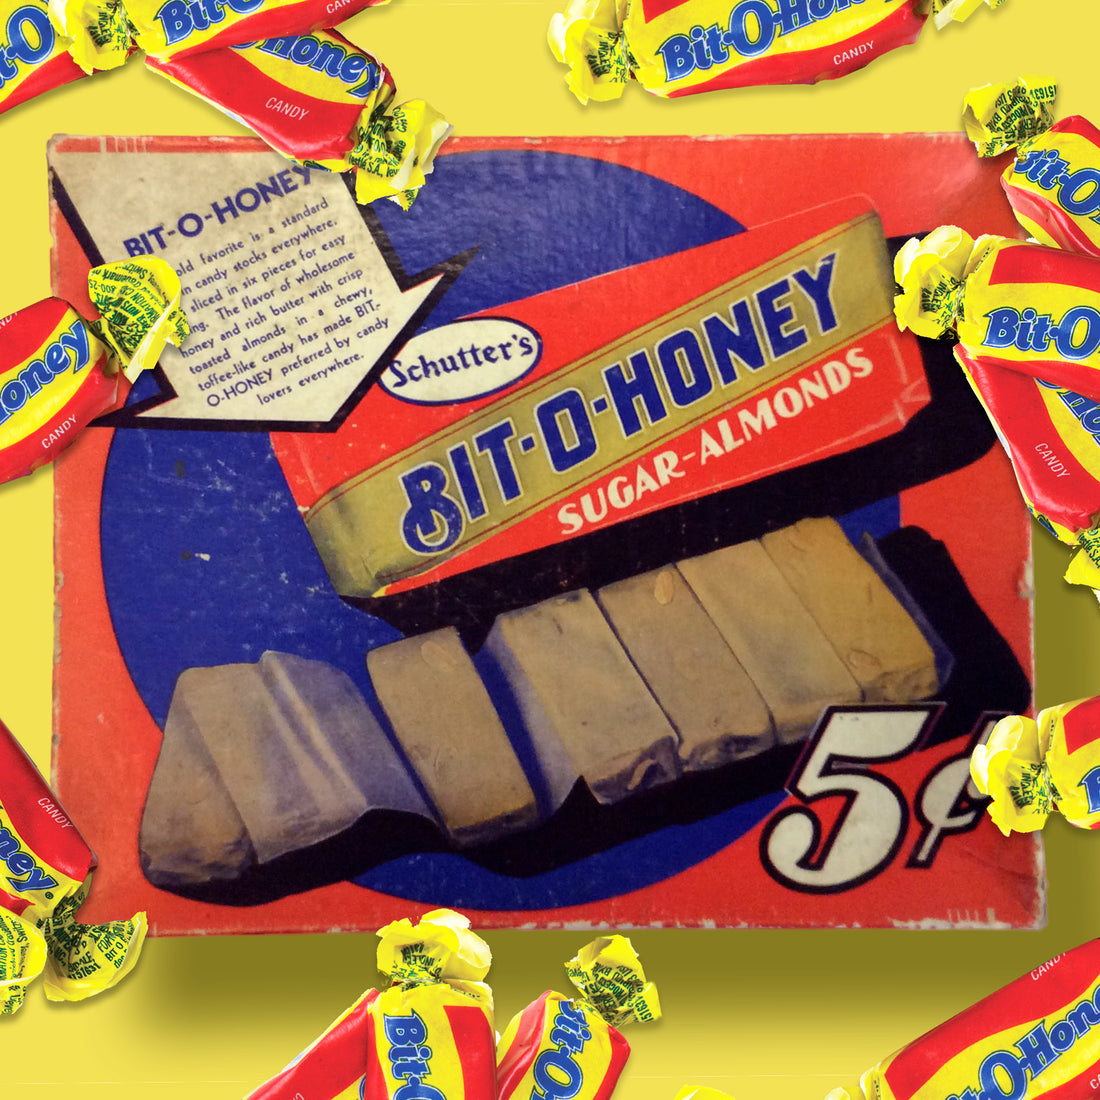 A Short History Of Bit-O-Honey Candy